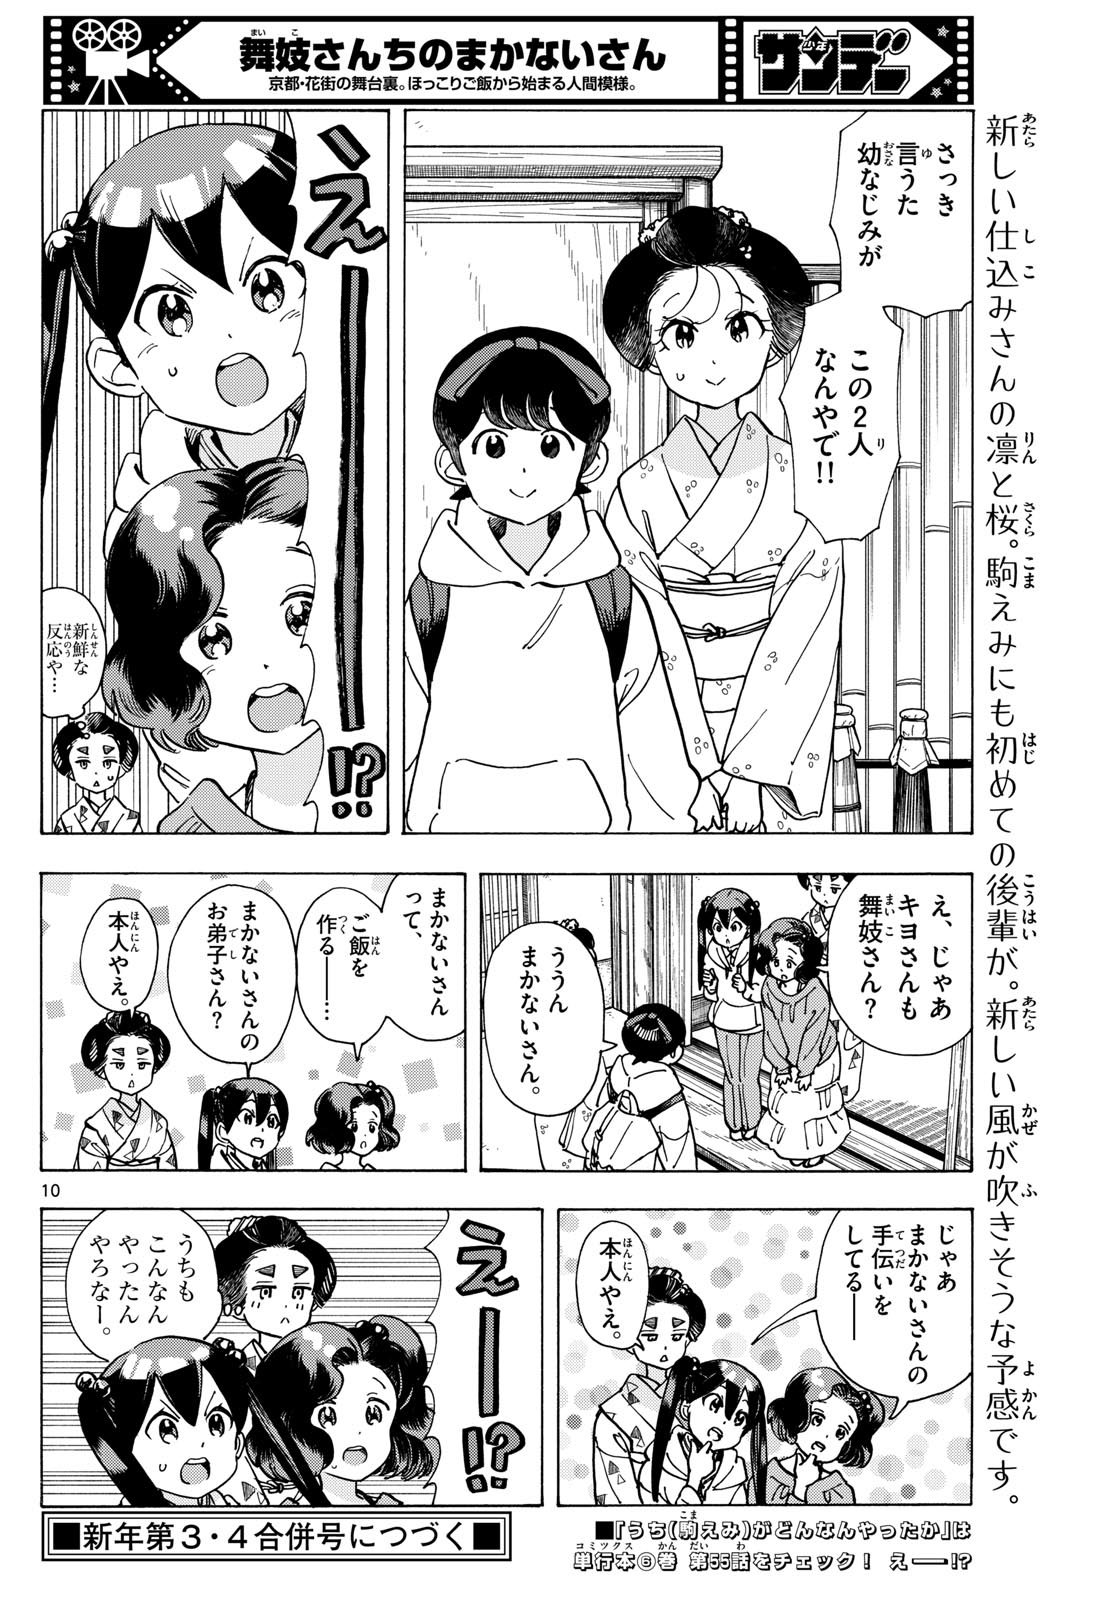 Maiko-san Chi no Makanai-san - Chapter 288 - Page 10